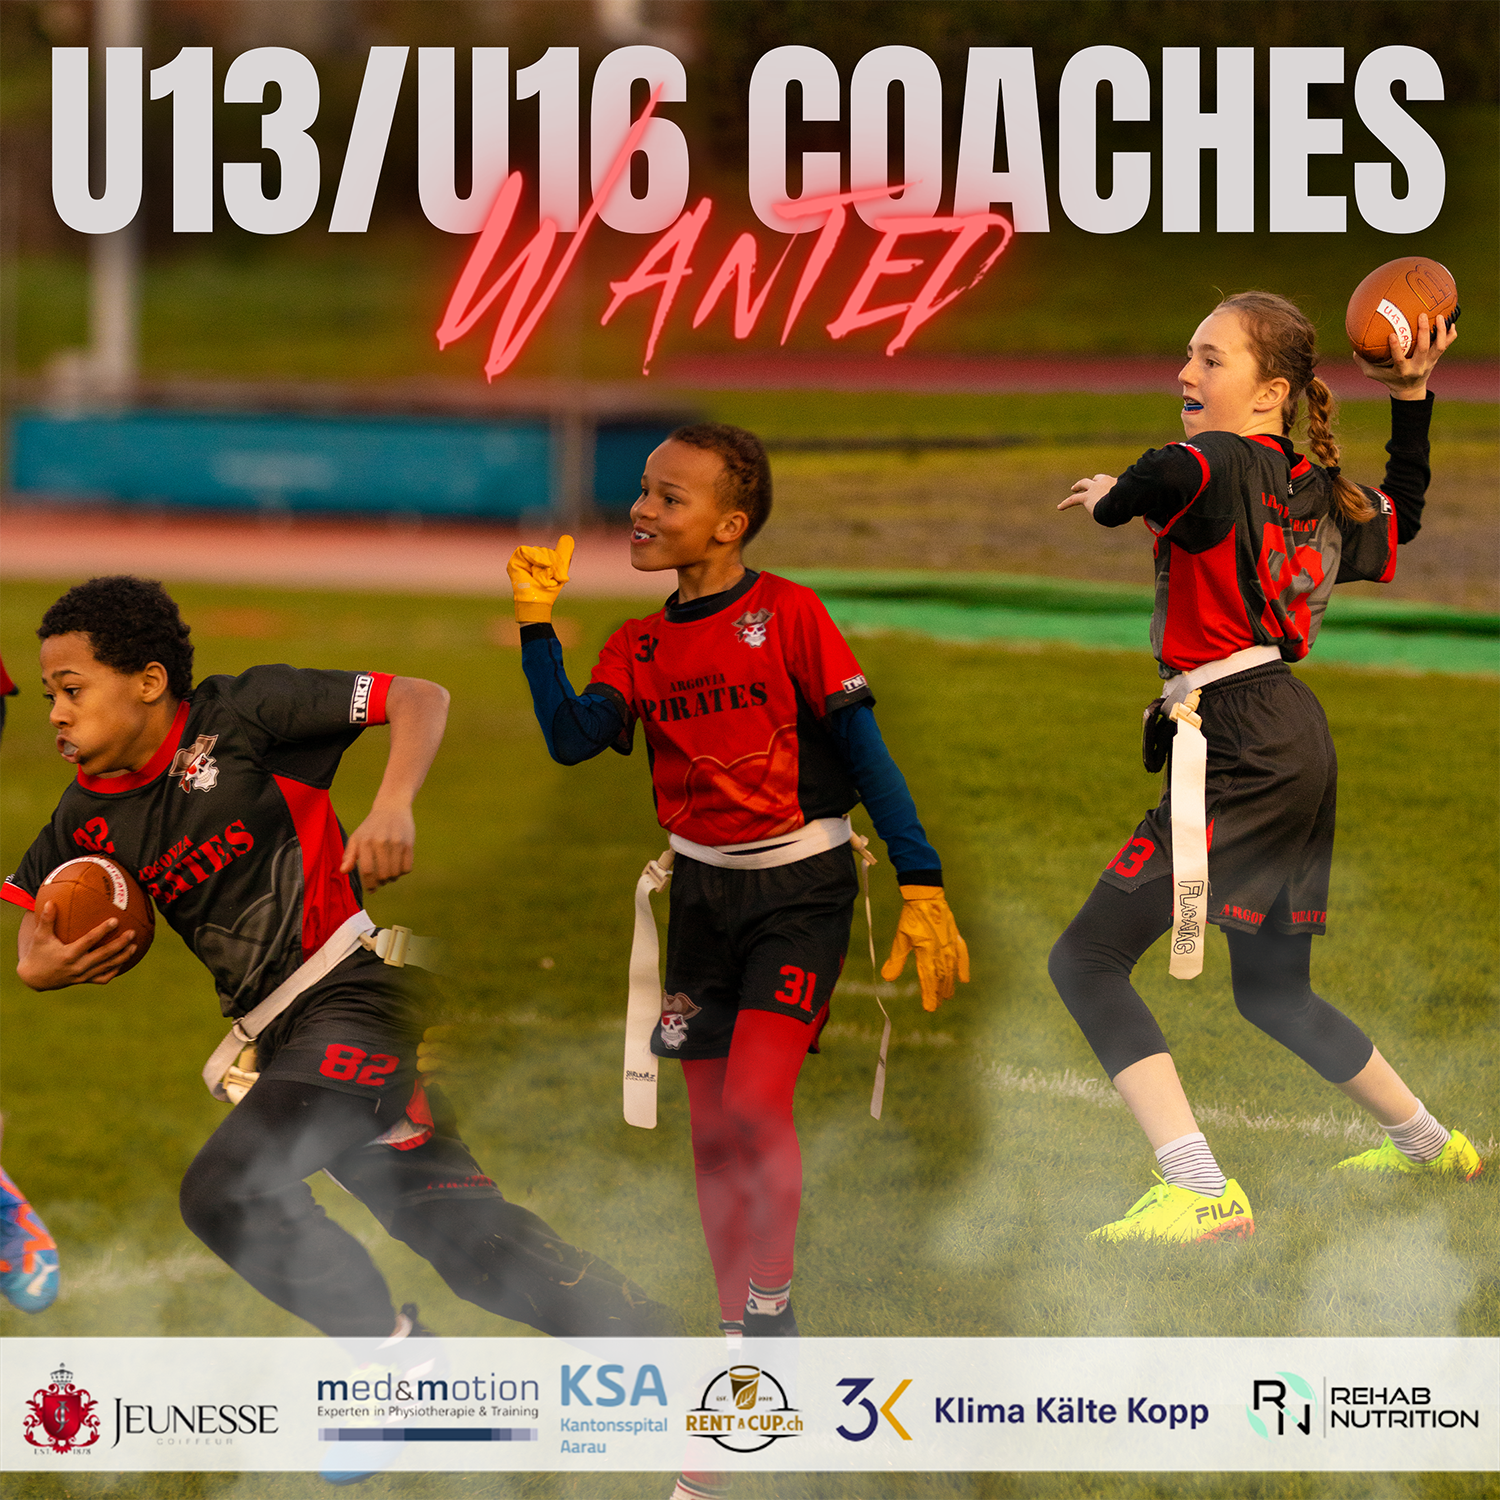 Coaches WANTED U13/U16